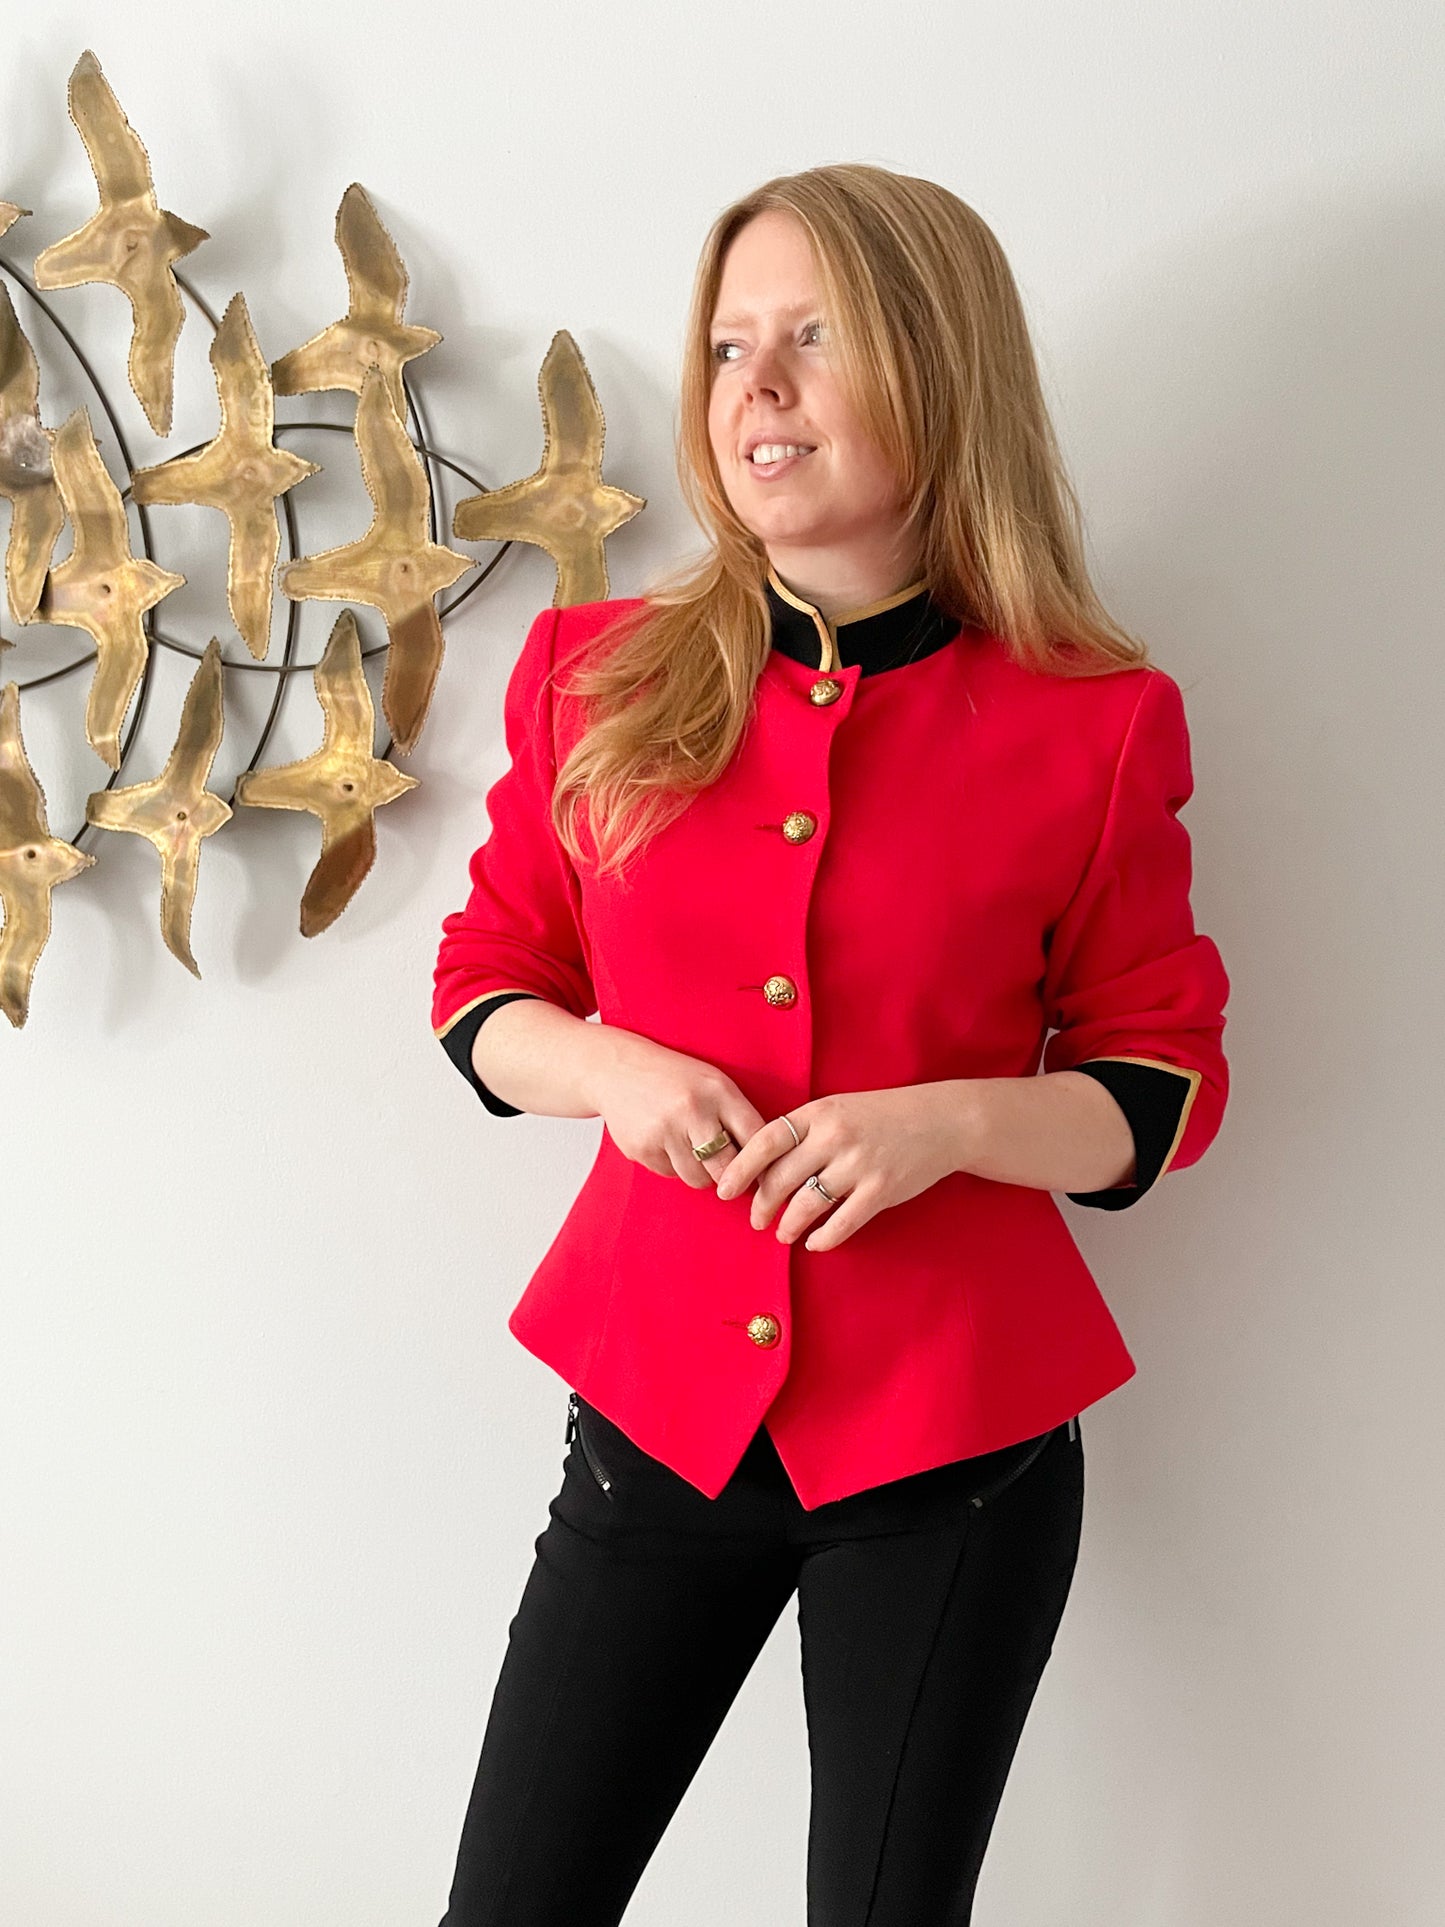 BICCI Florine Wachter Vintage Red Gold Trimmed Wool Blazer Jacket - S/M